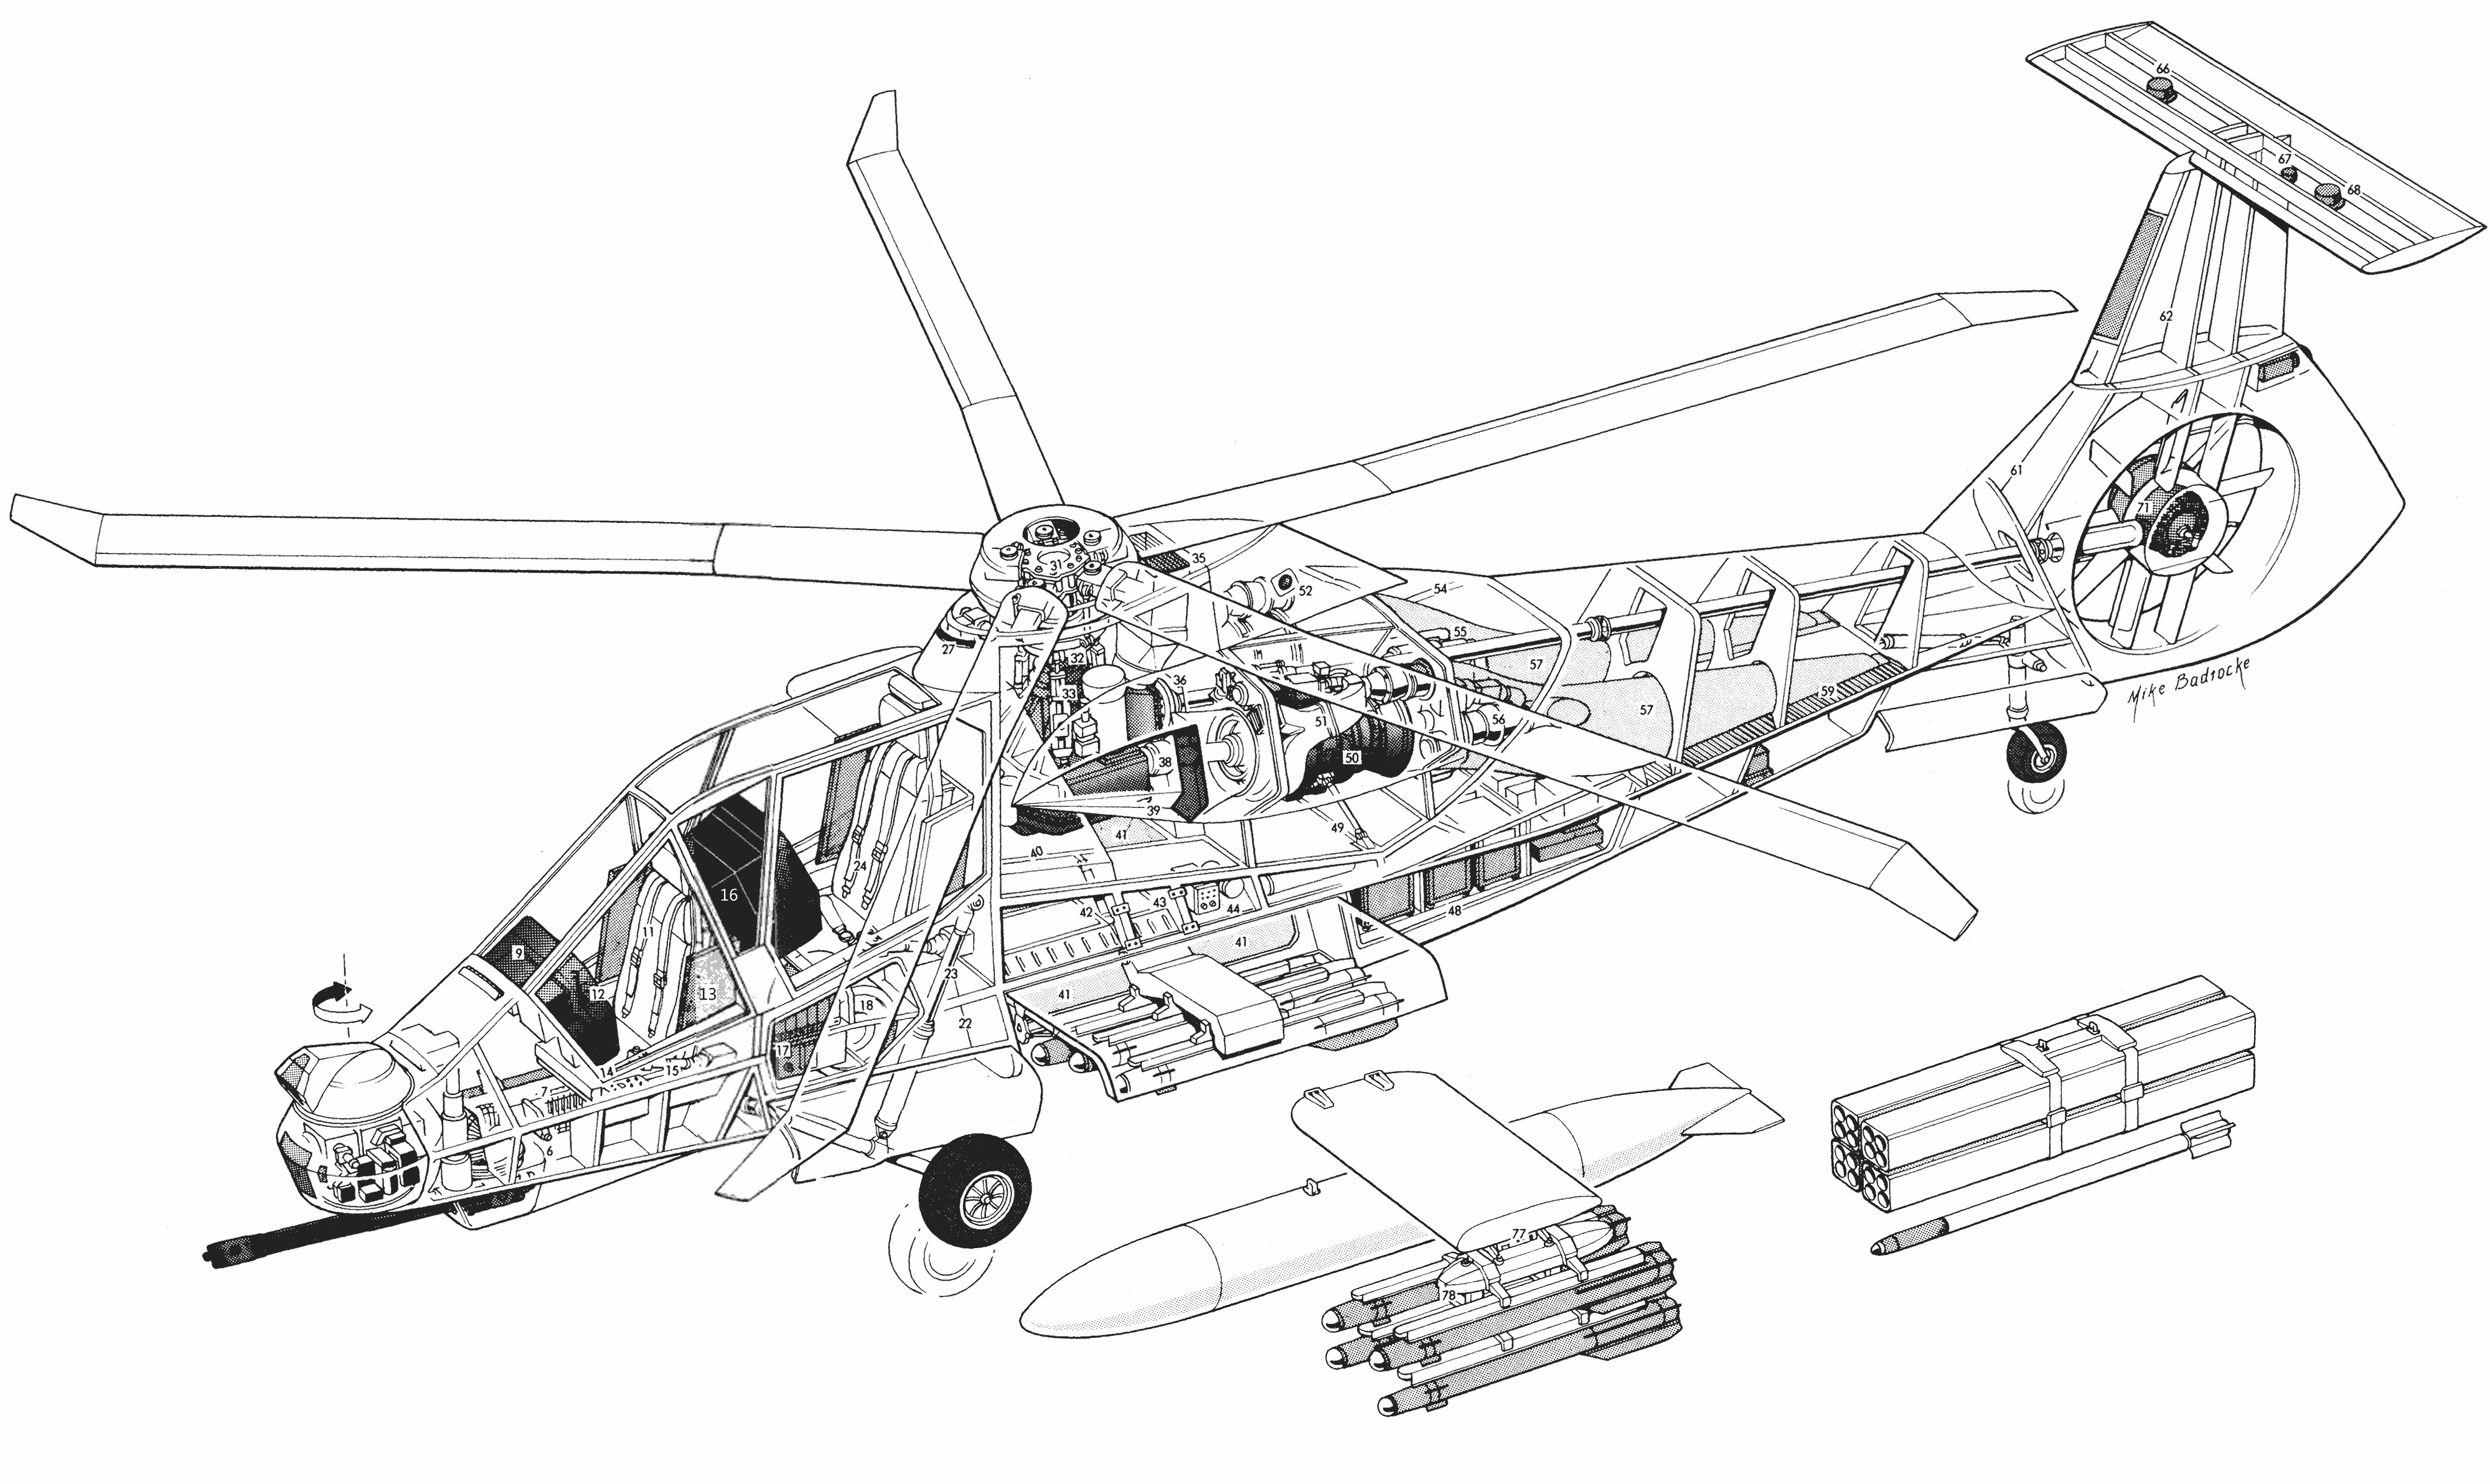 RAH-66 Comanche cutaway